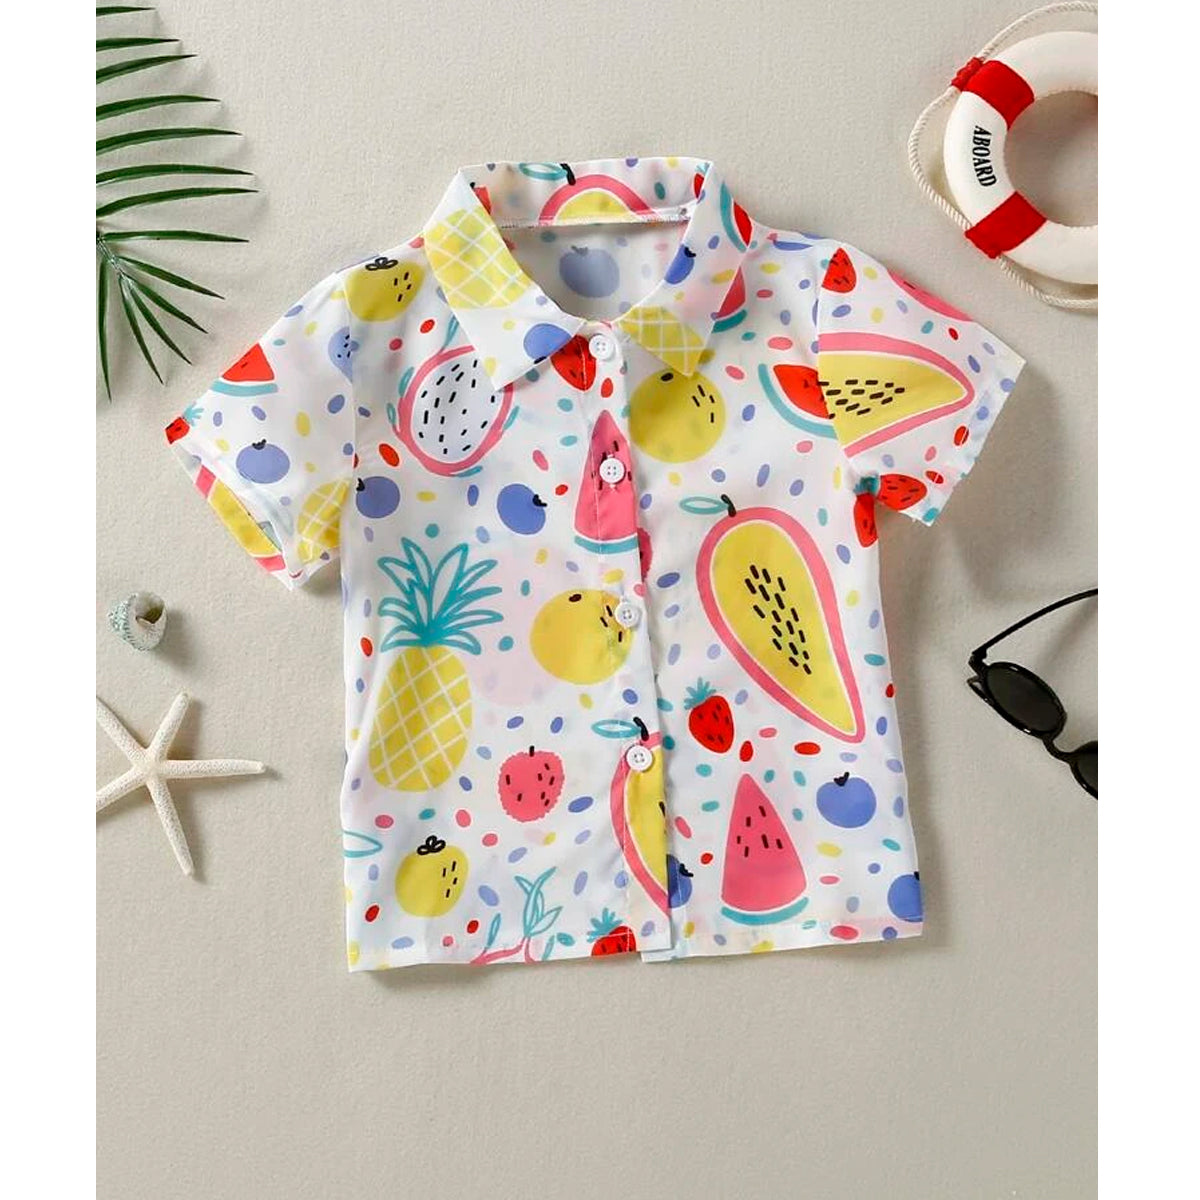 Venutaloza Fruits Print Short Sleeve Shirt For Boy.